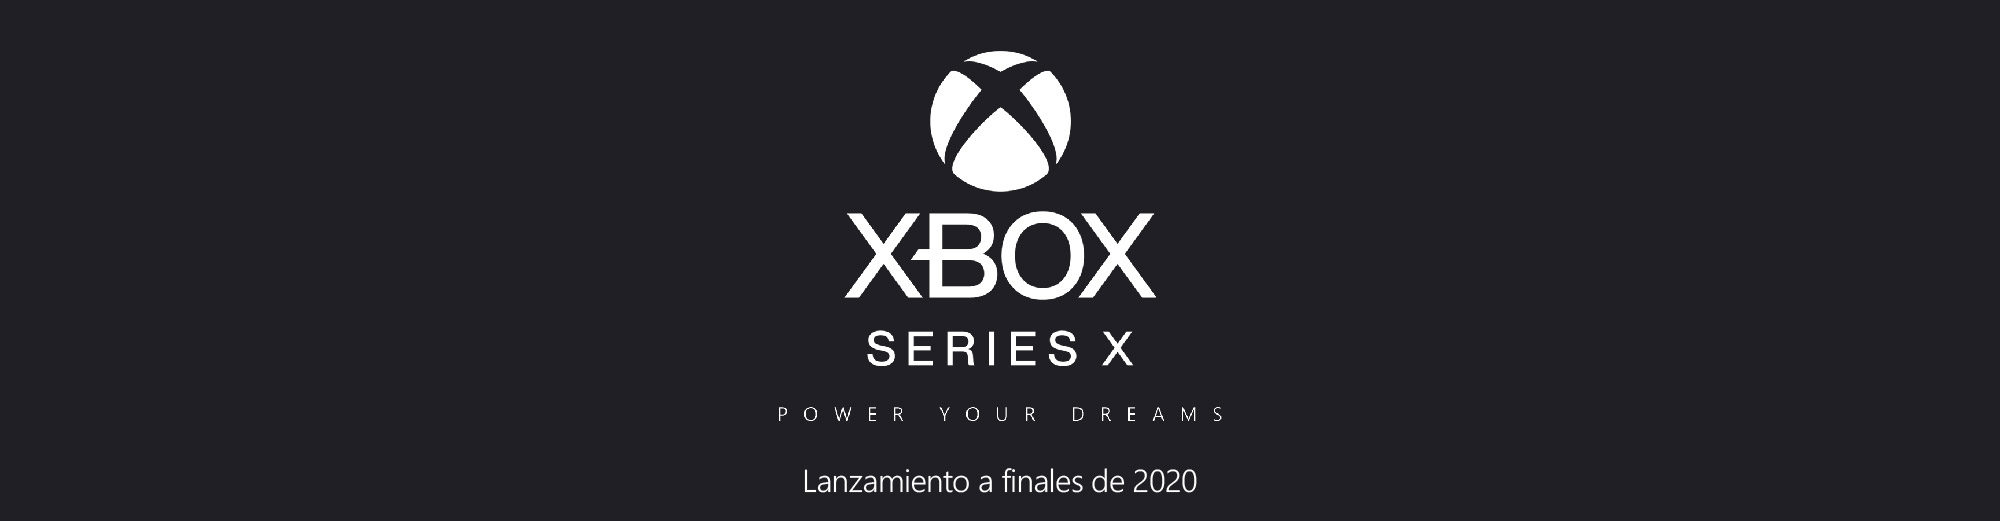 Xbox Serie X Lanzamiento - Preventa